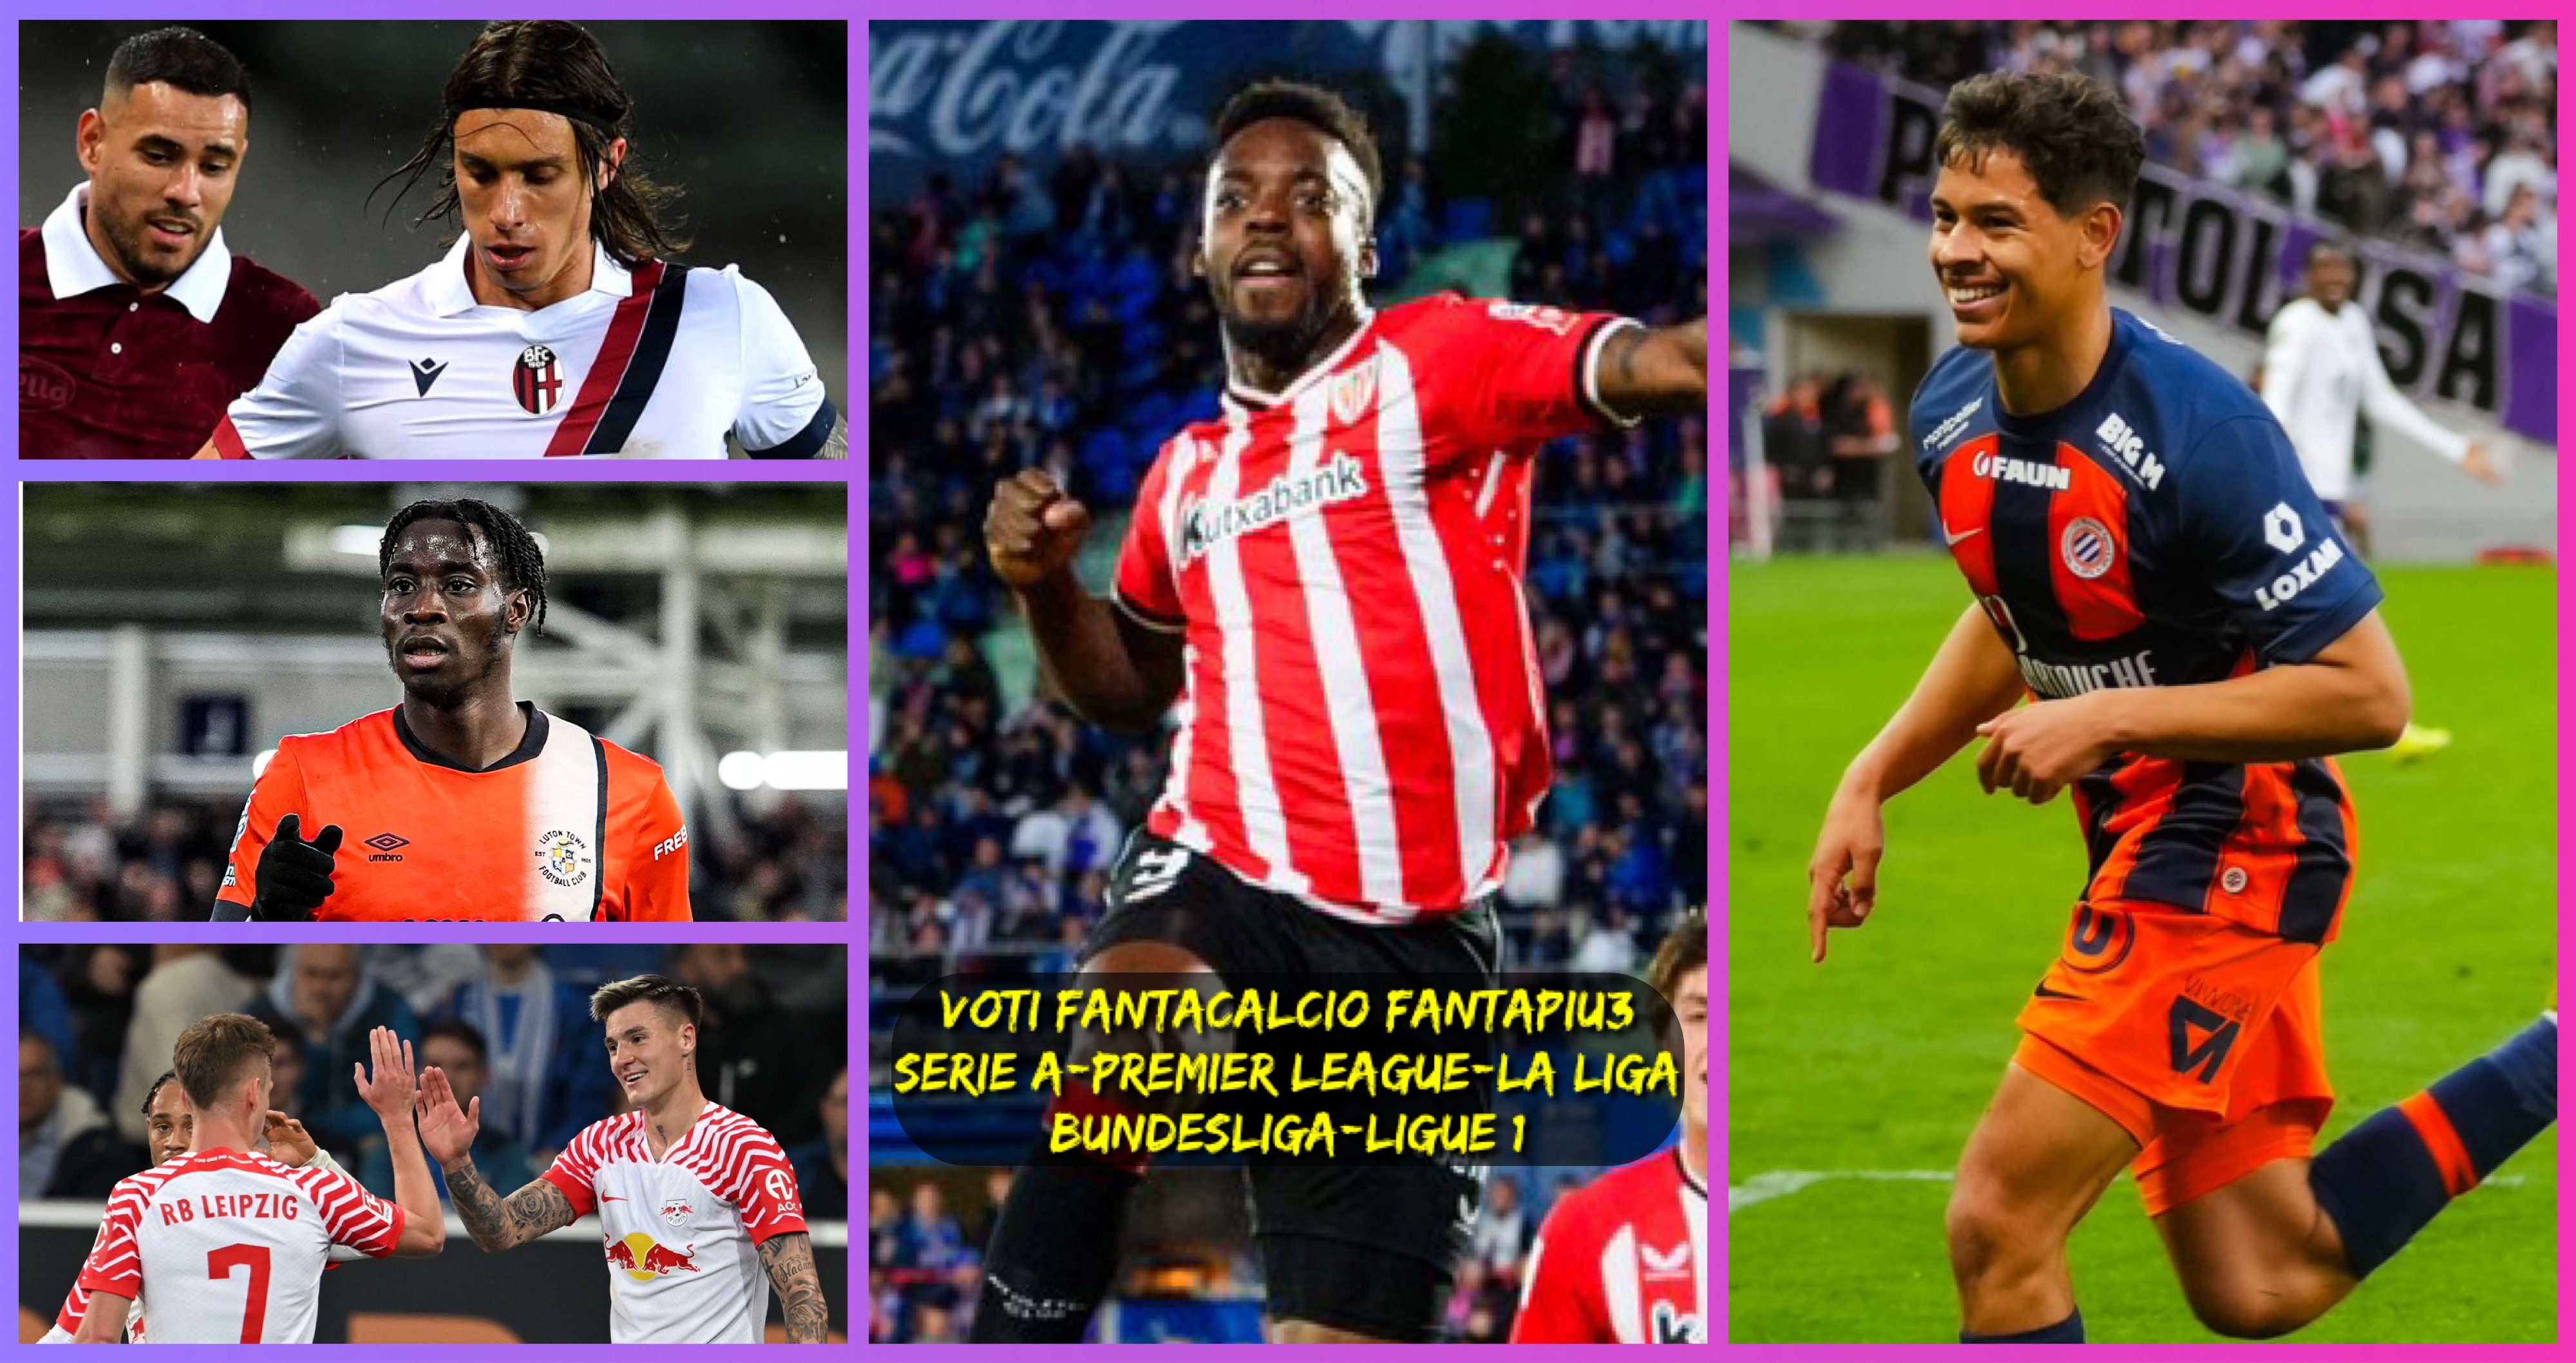 Voti fantacalcio Fantapiu3 per Serie A, Premier League, La Liga, Bundesliga e Ligue 1